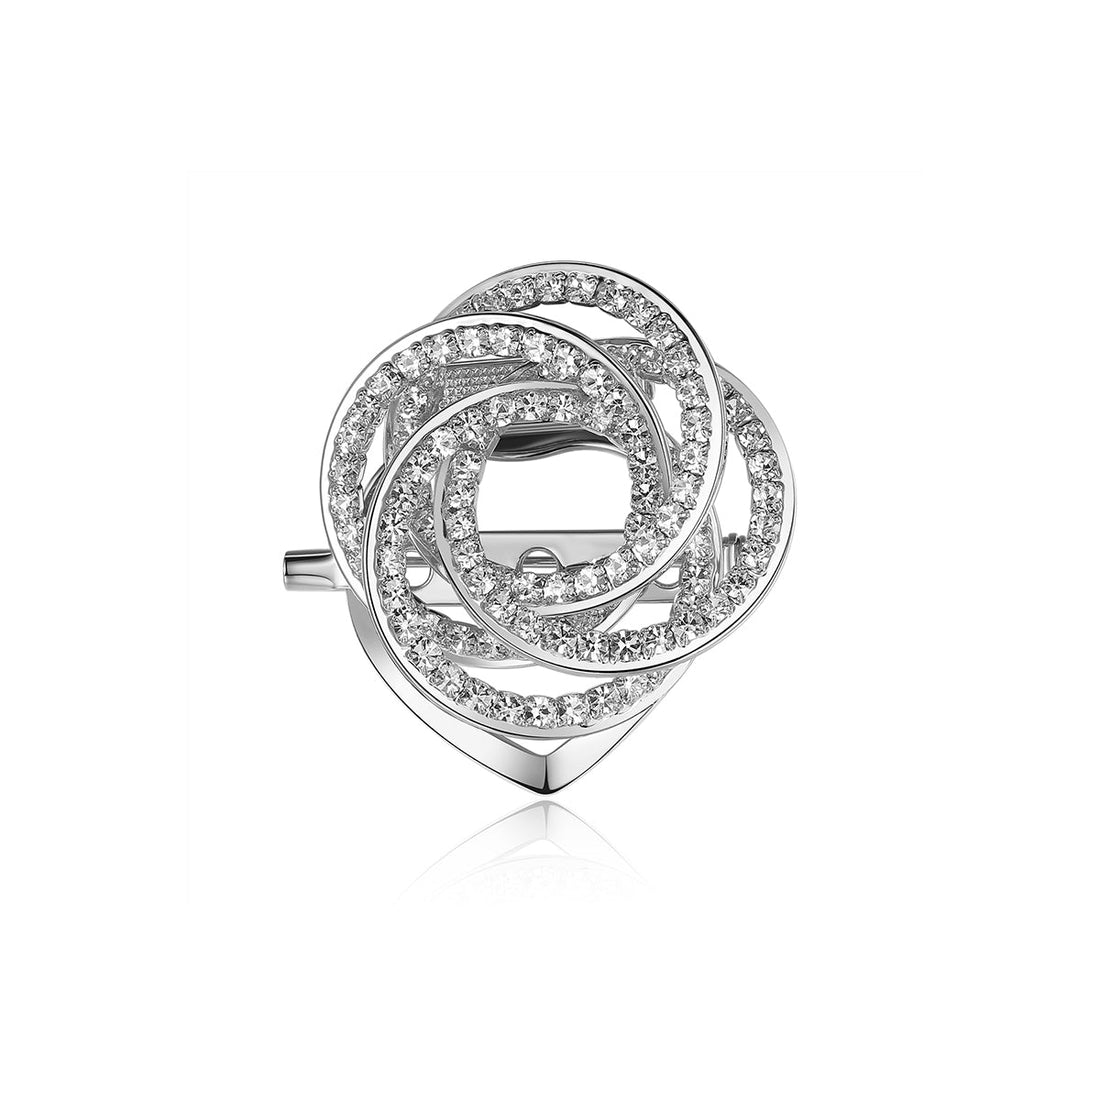 Crystal Camellia Silver Brooch - 0cm